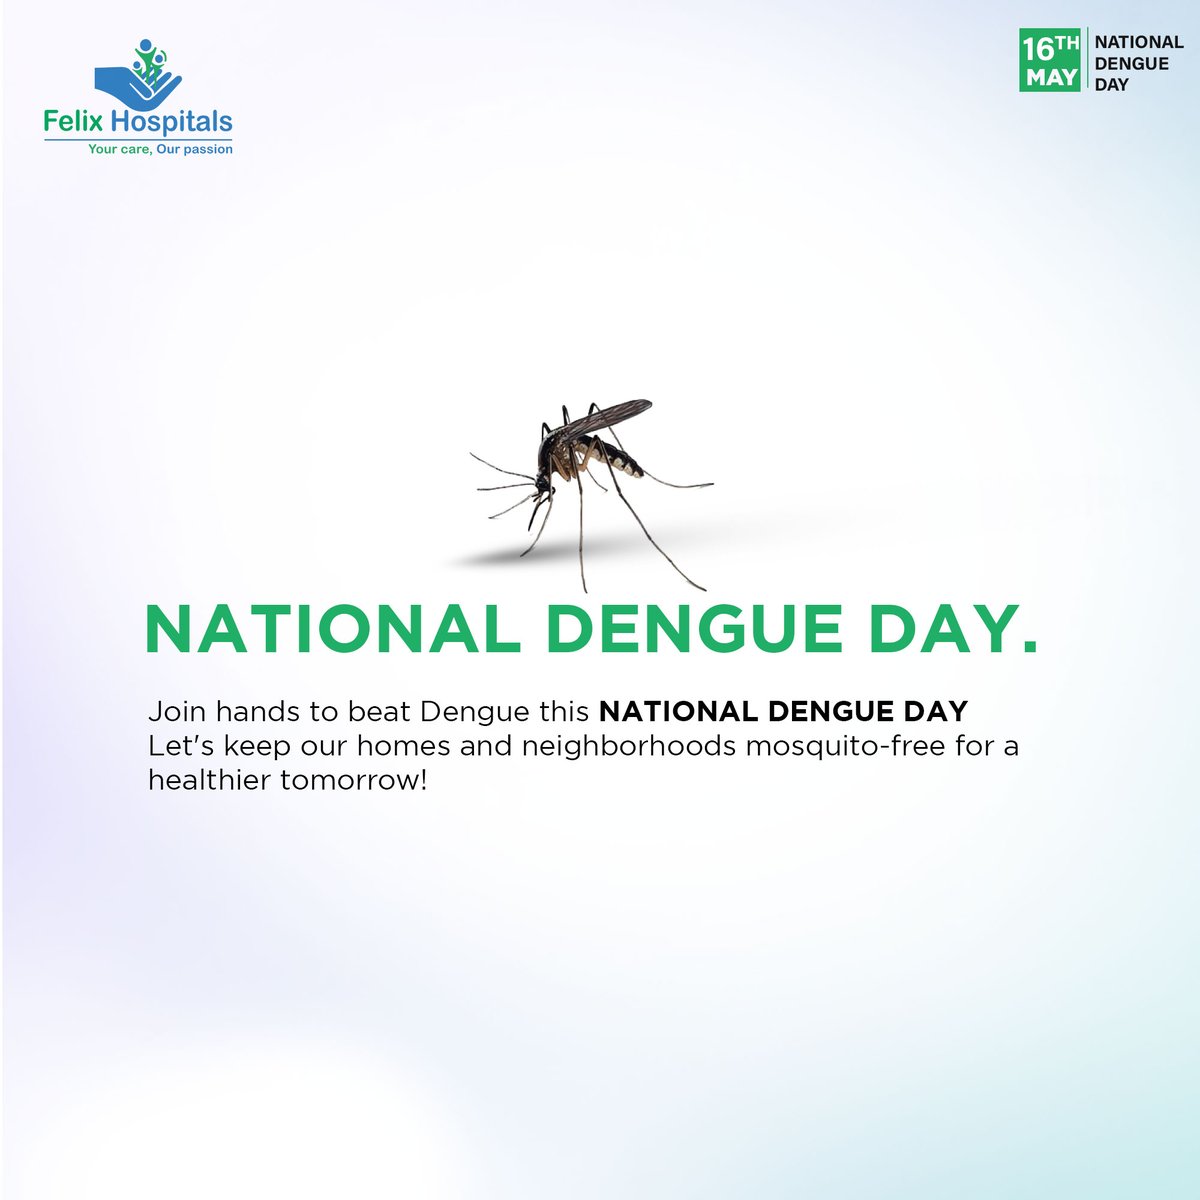 Prepare for #NationalDengueDay! Fight mosquitoes 🦟 with: 1. Dump water. 2. Repellent. 3. Screen doors. 4. Wear long clothes. 5. Sleep under nets. #FightTheBite! 💪 #NationalDengueDay #StopDengue #Dengue #denguefever #DengueAwareness #DenguePrevention #healthiswealth #noida